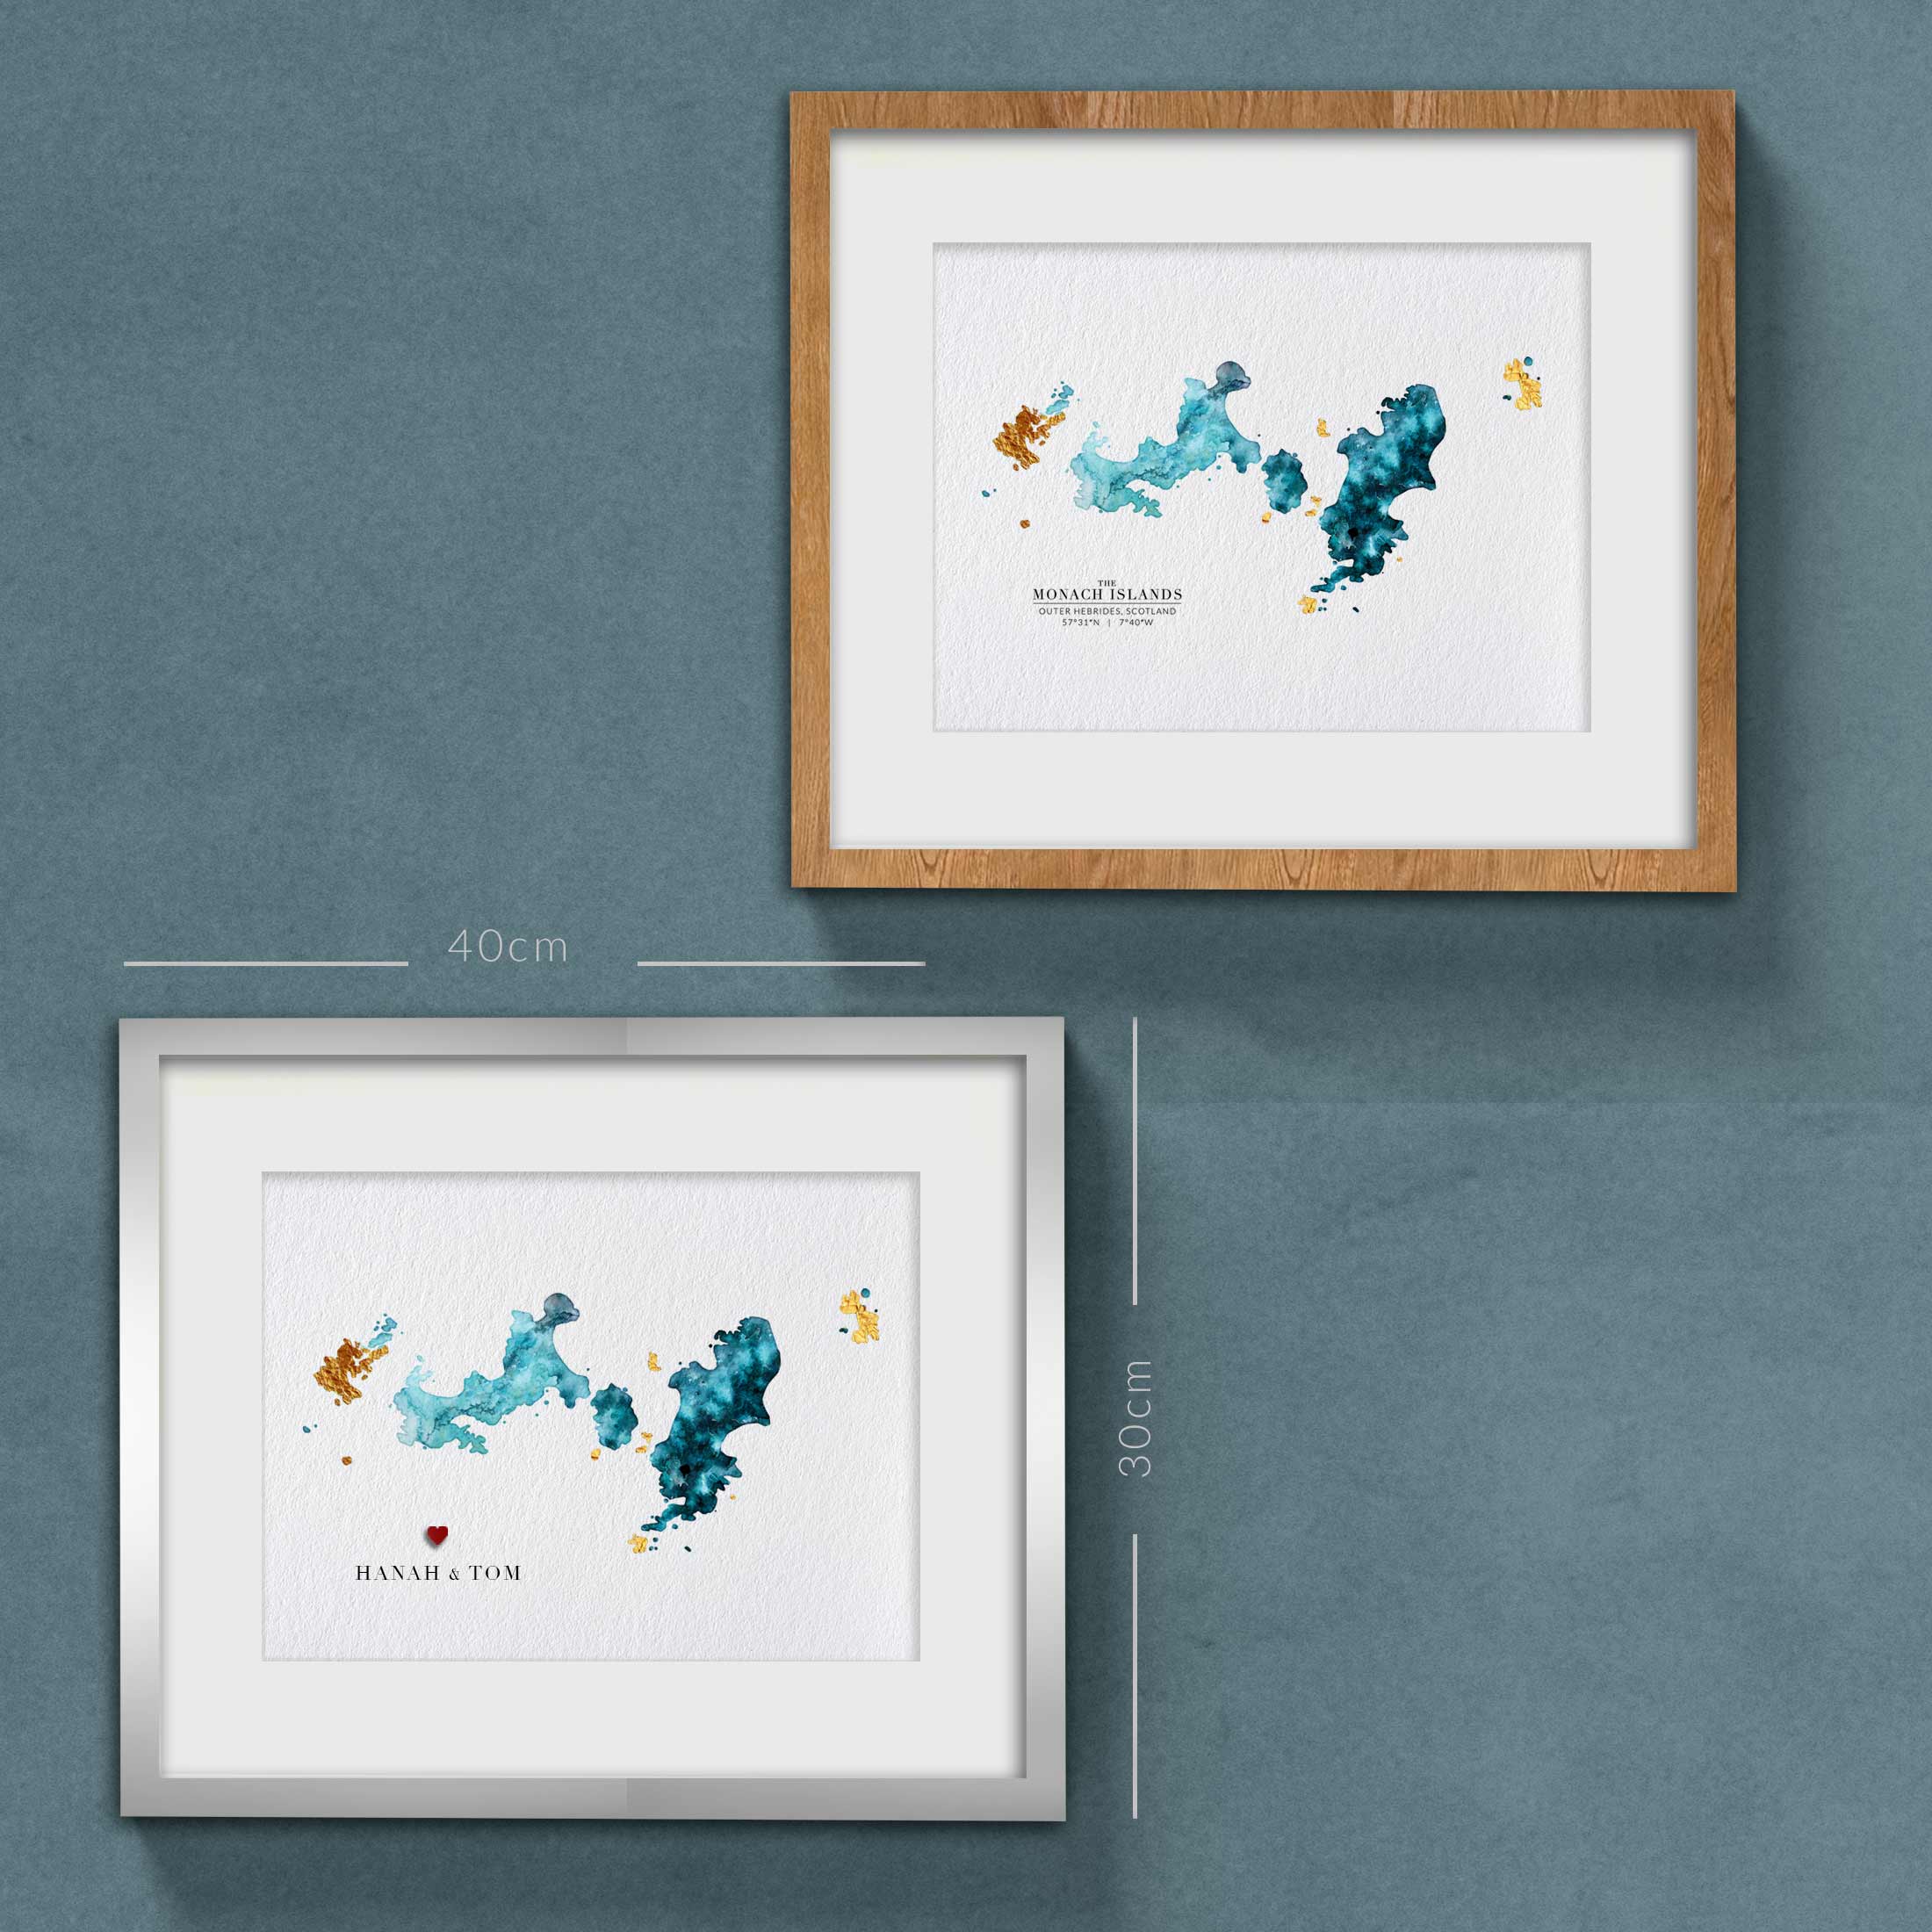 EJayDesign Scottish Prints Monach Islands Watercolour Map